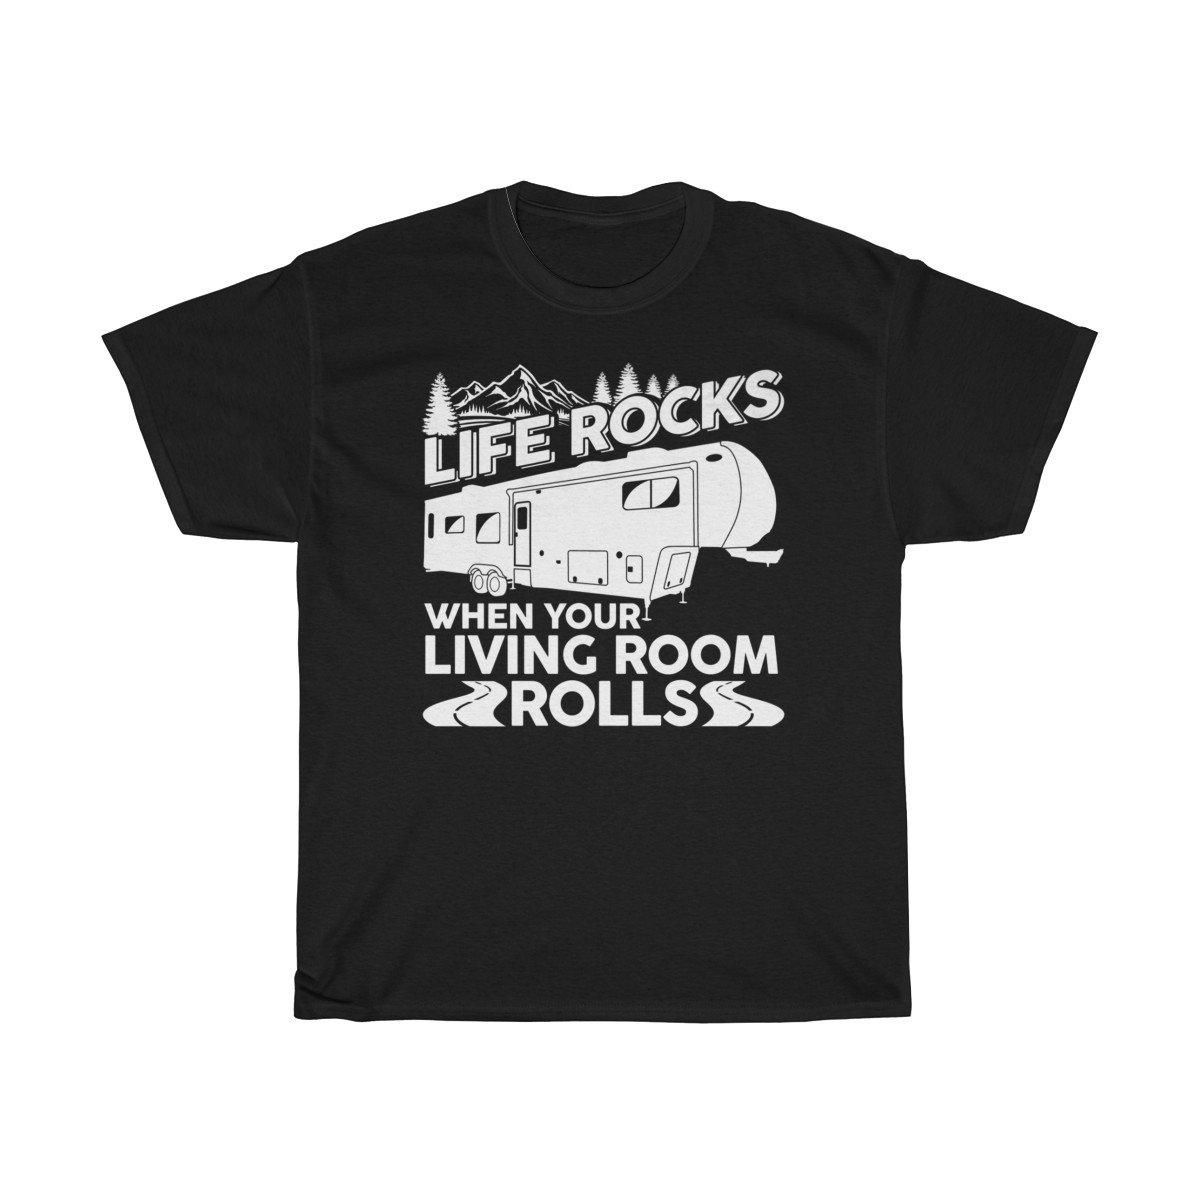 Life rocks when your living room rolls Tshirt PAN2TS0212